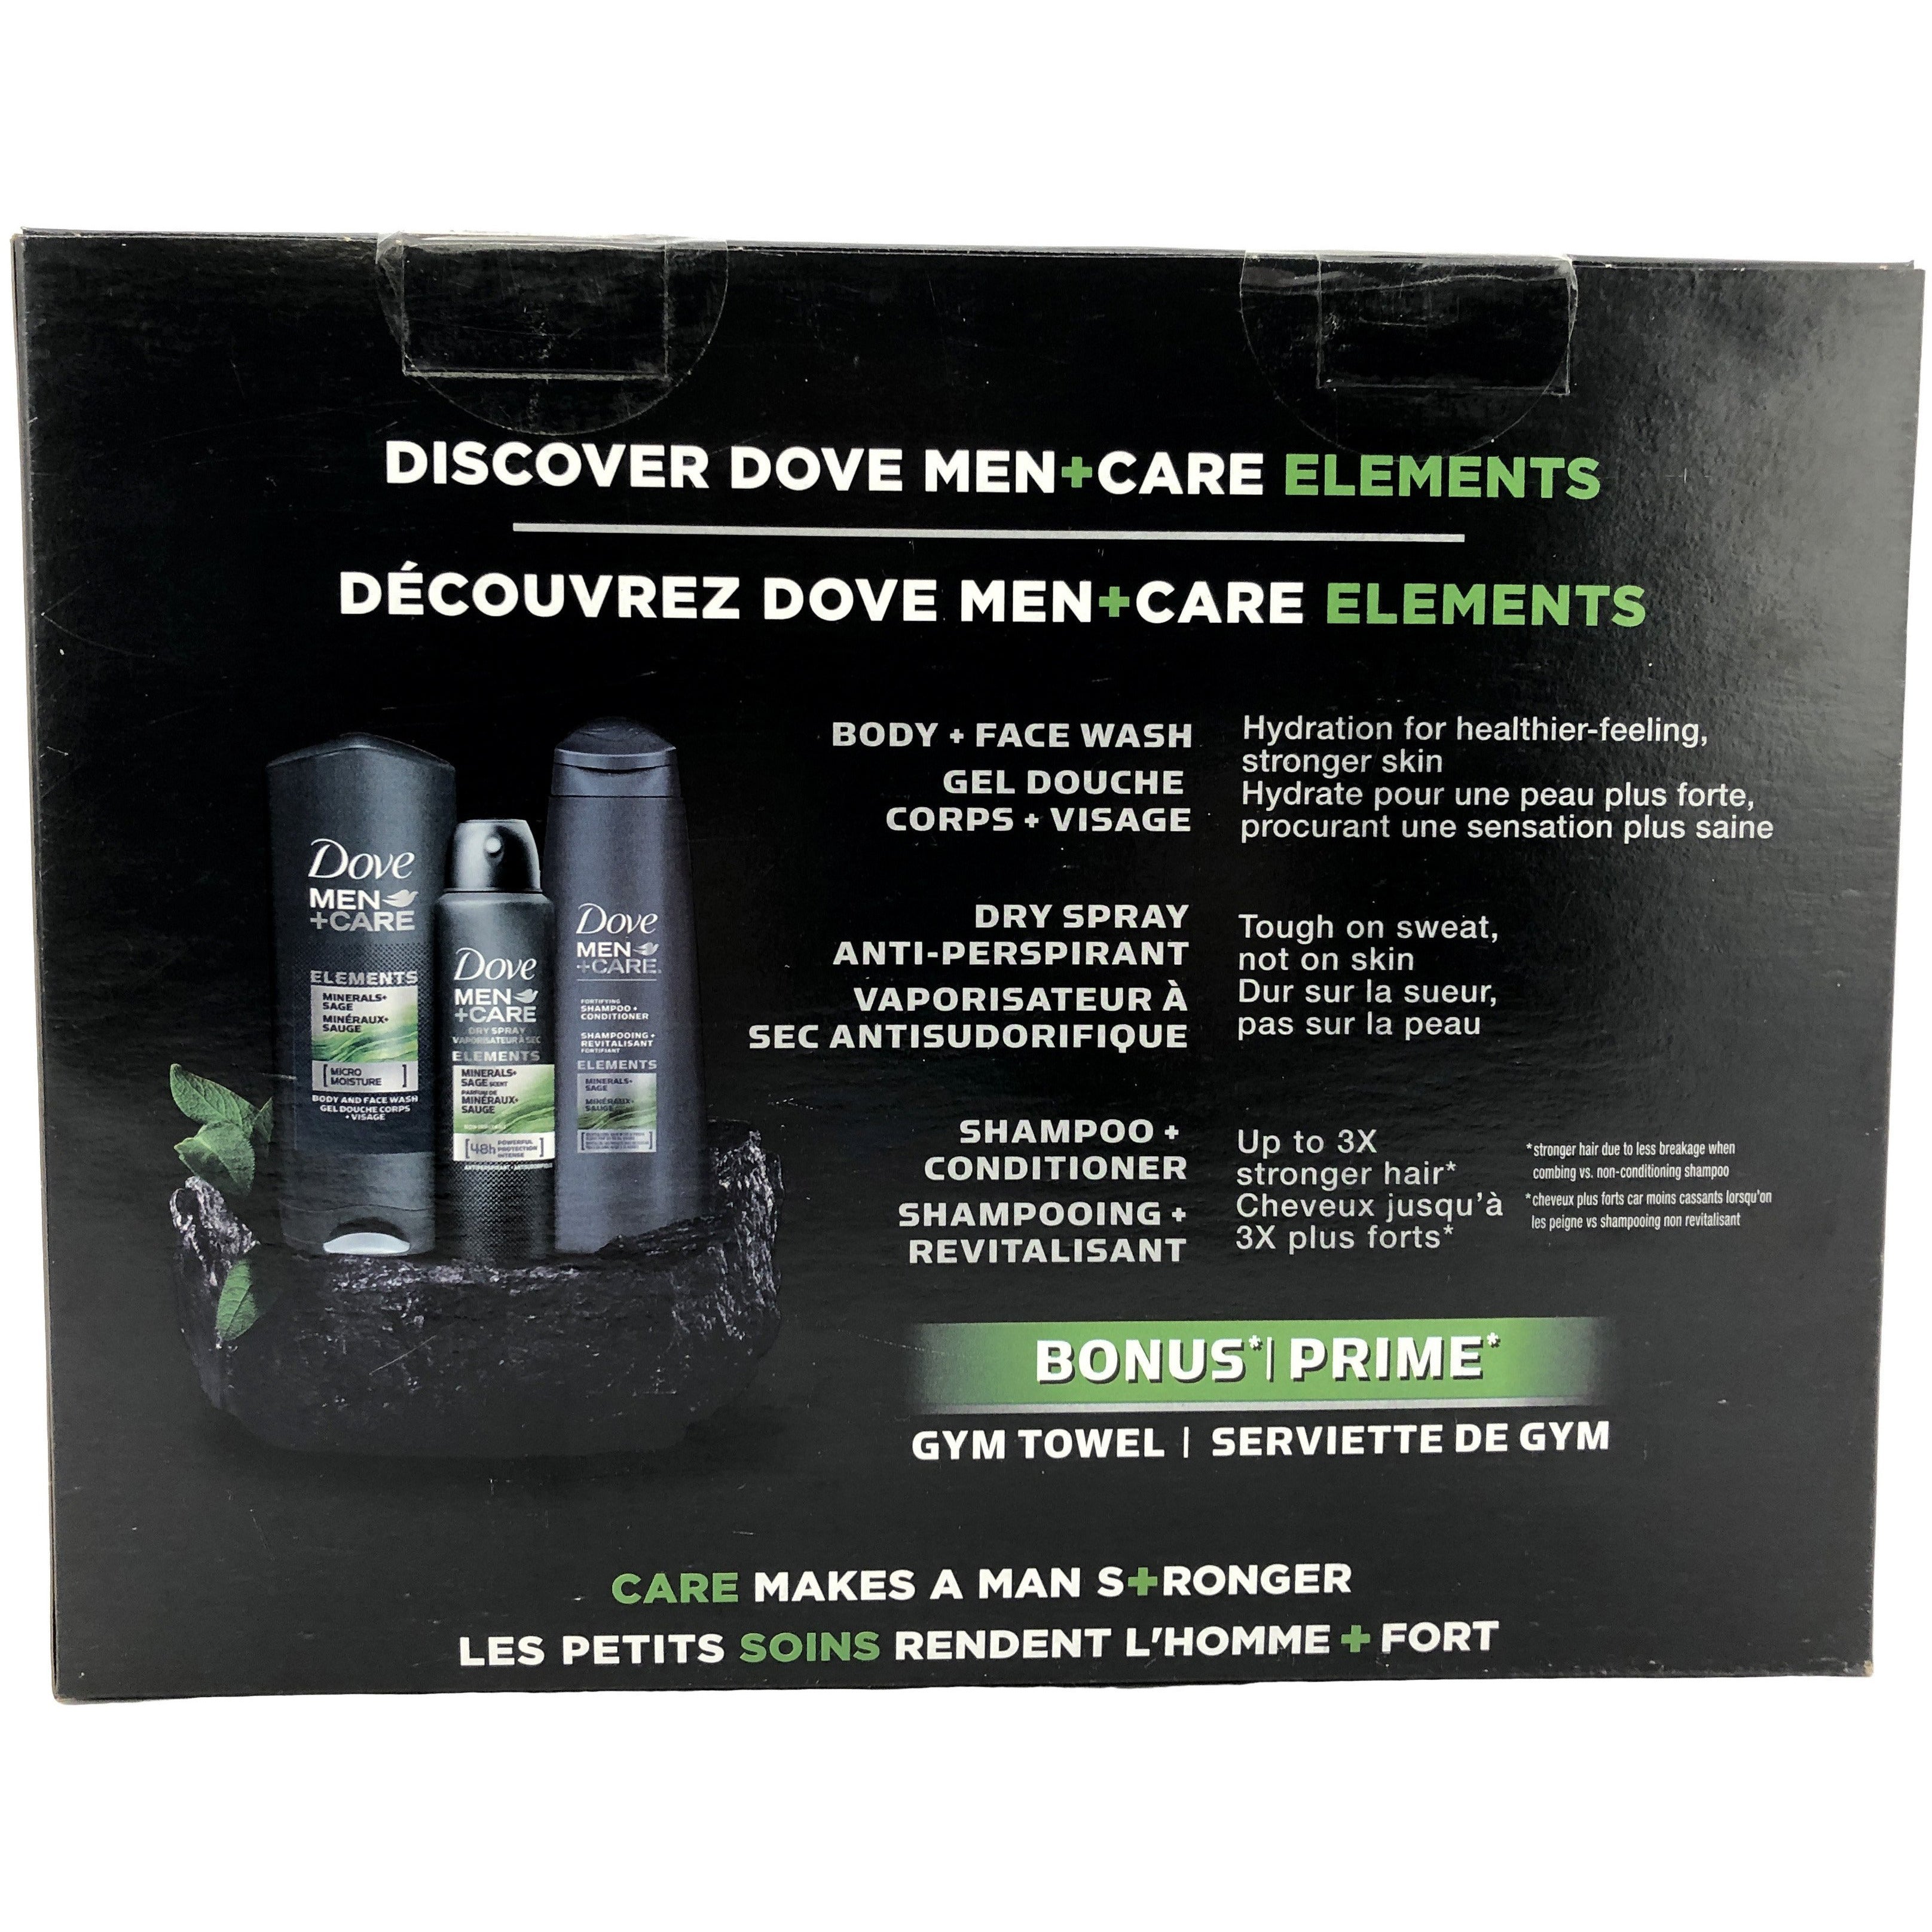 Dove mens + care gift set containing shampoo body wash and antiperspirant plus a bonus gym towel